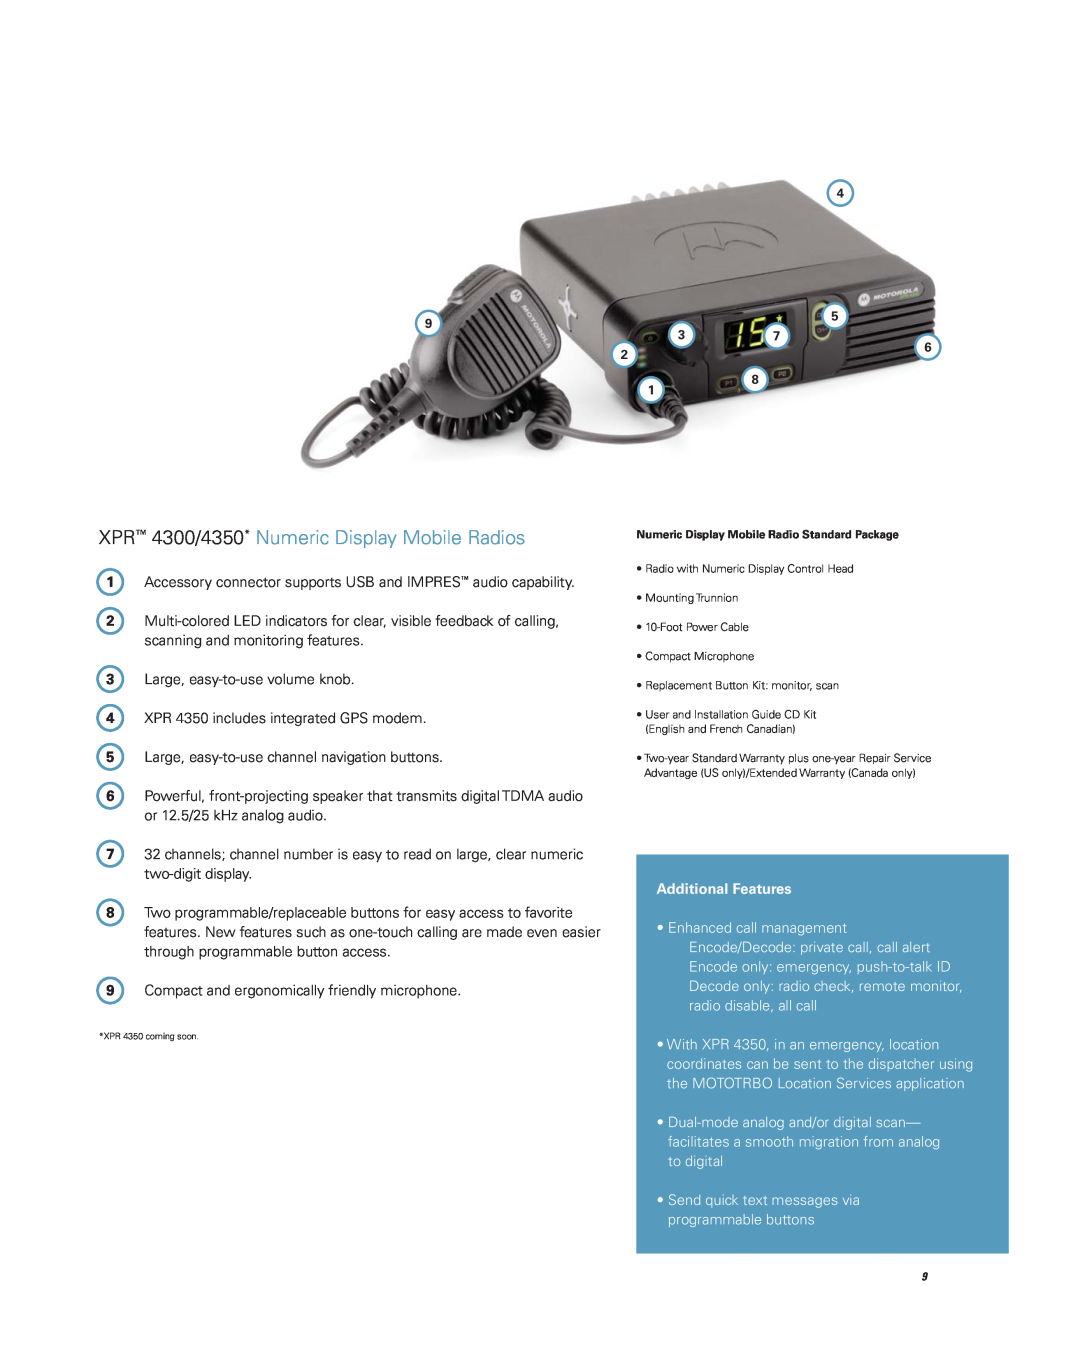 Motorola Professional Digital Two-Way Radio System brochure XPR 4300/4350* Numeric Display Mobile Radios 